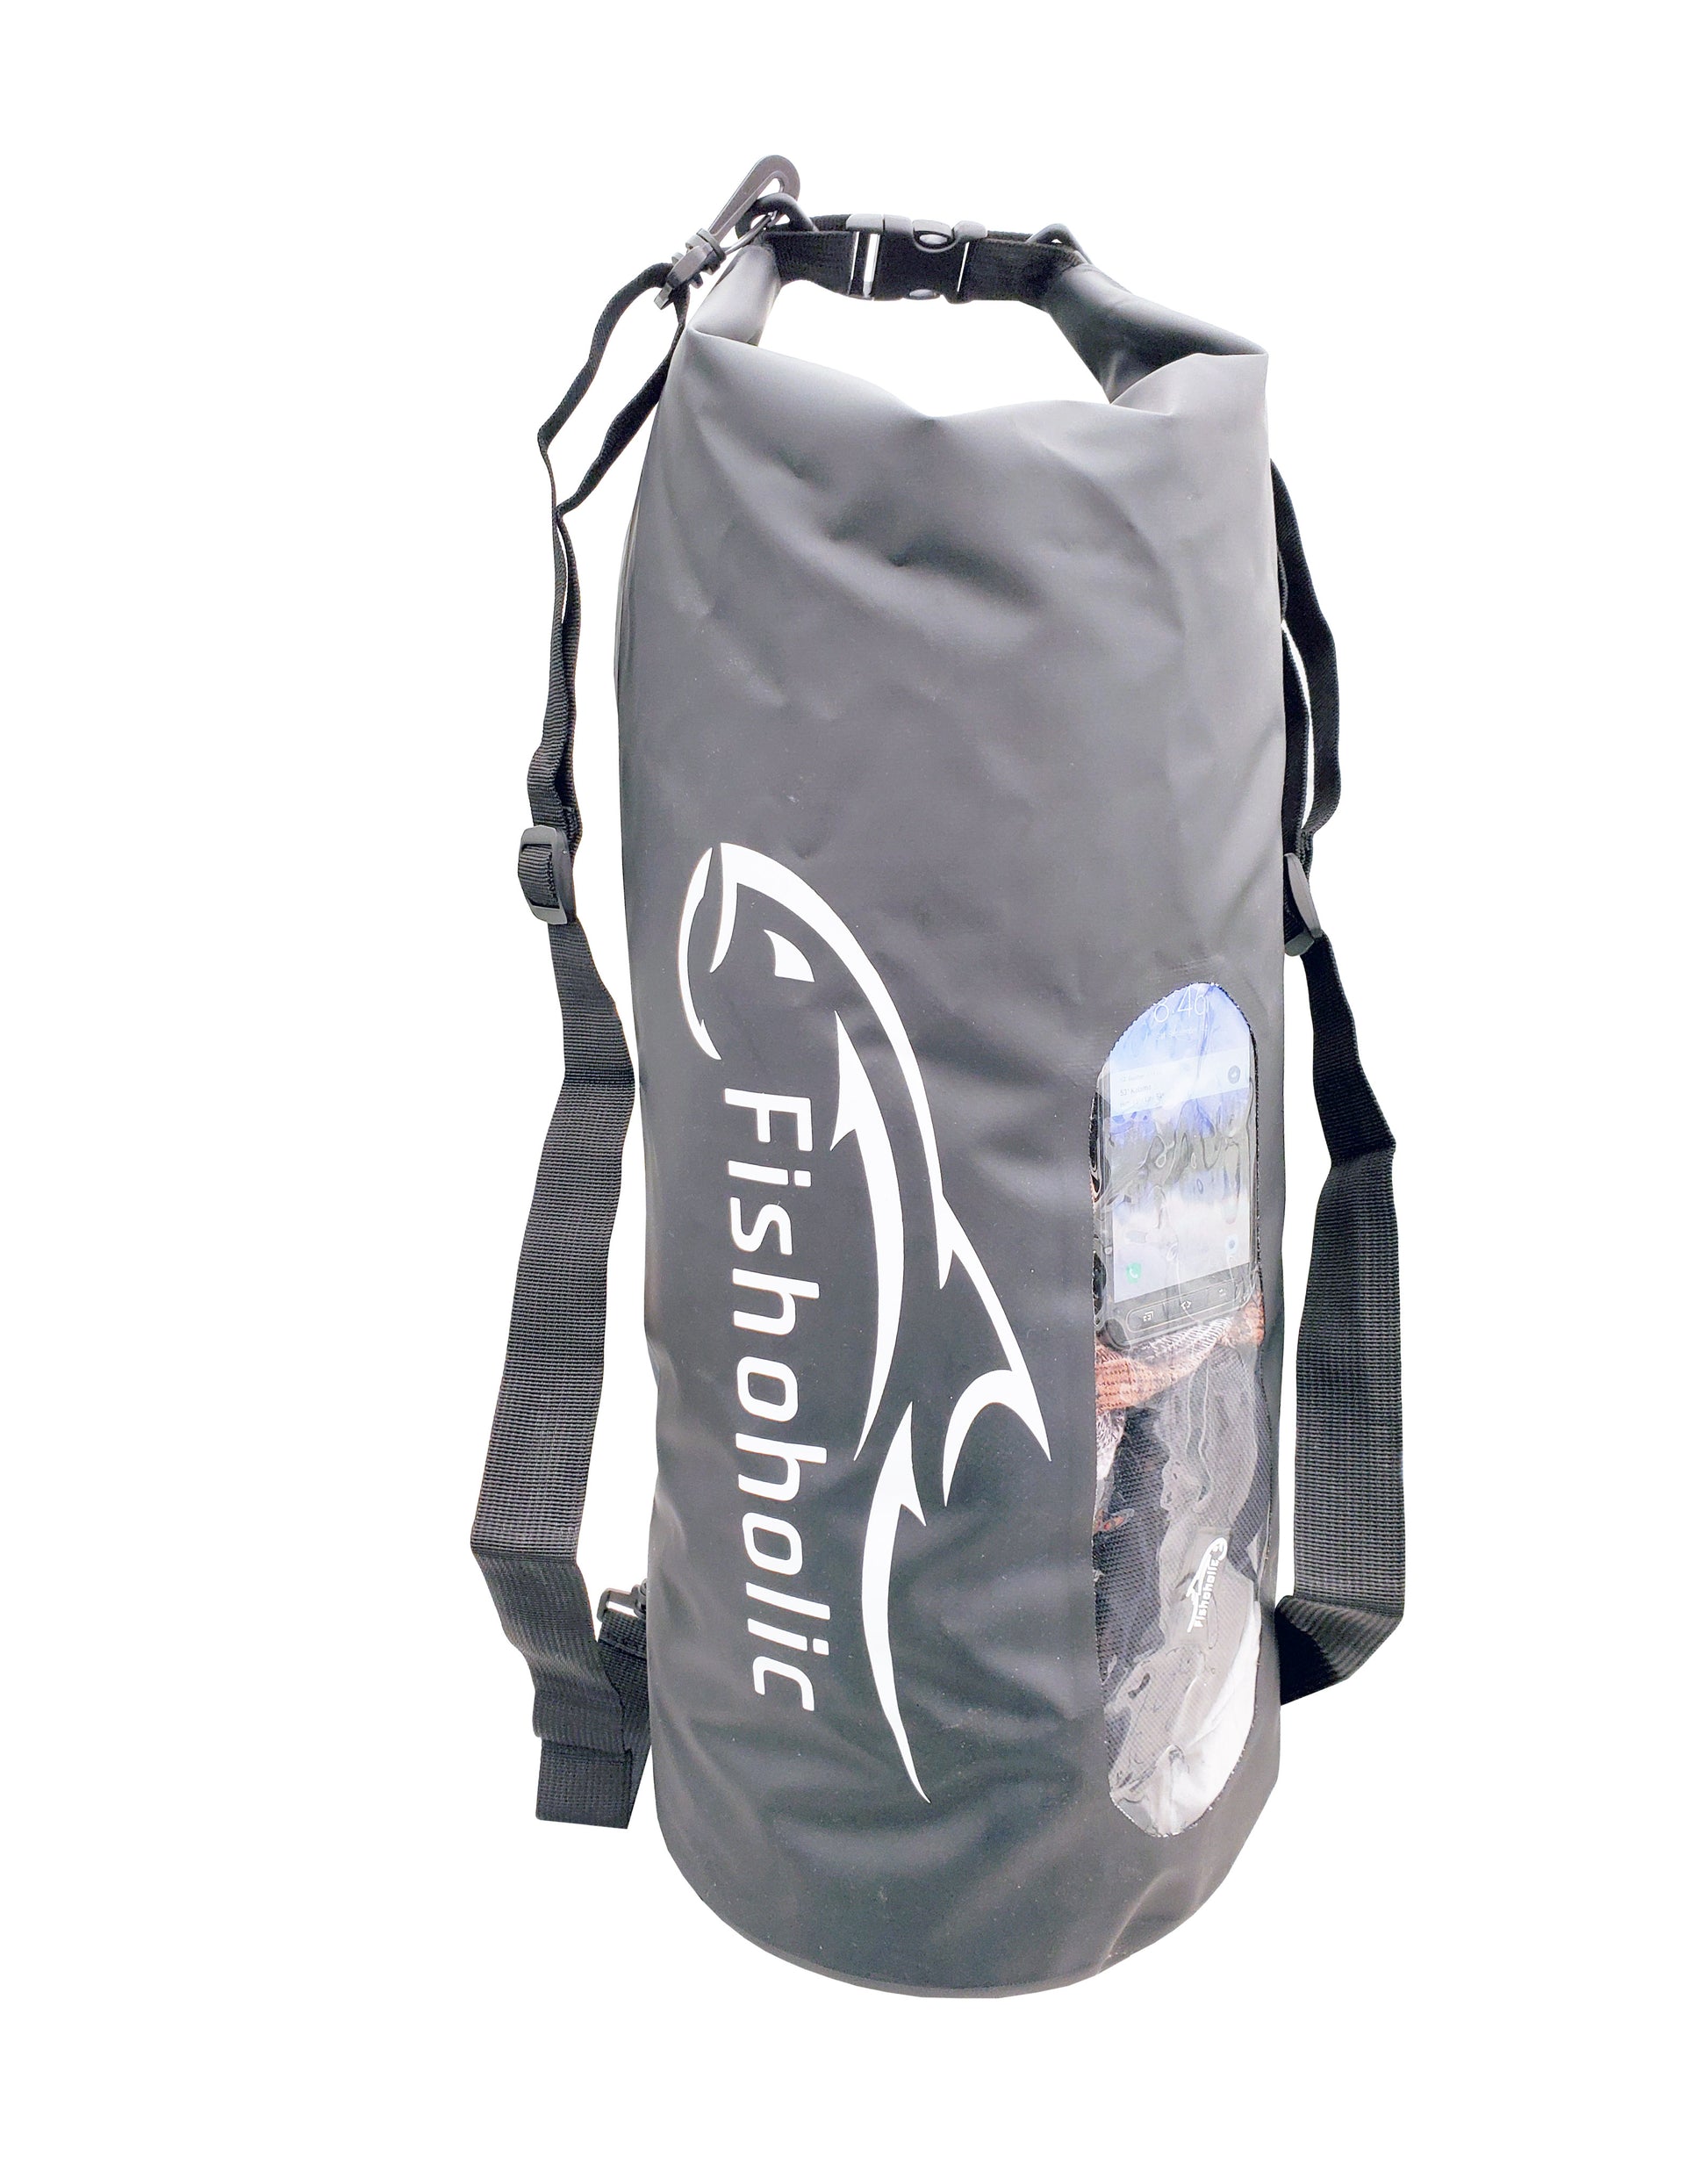 Fishoholic 15L Dry Bag - Clear Window Waterproof Gear Bags - Fail-Safe Snap  - Tough & Durable